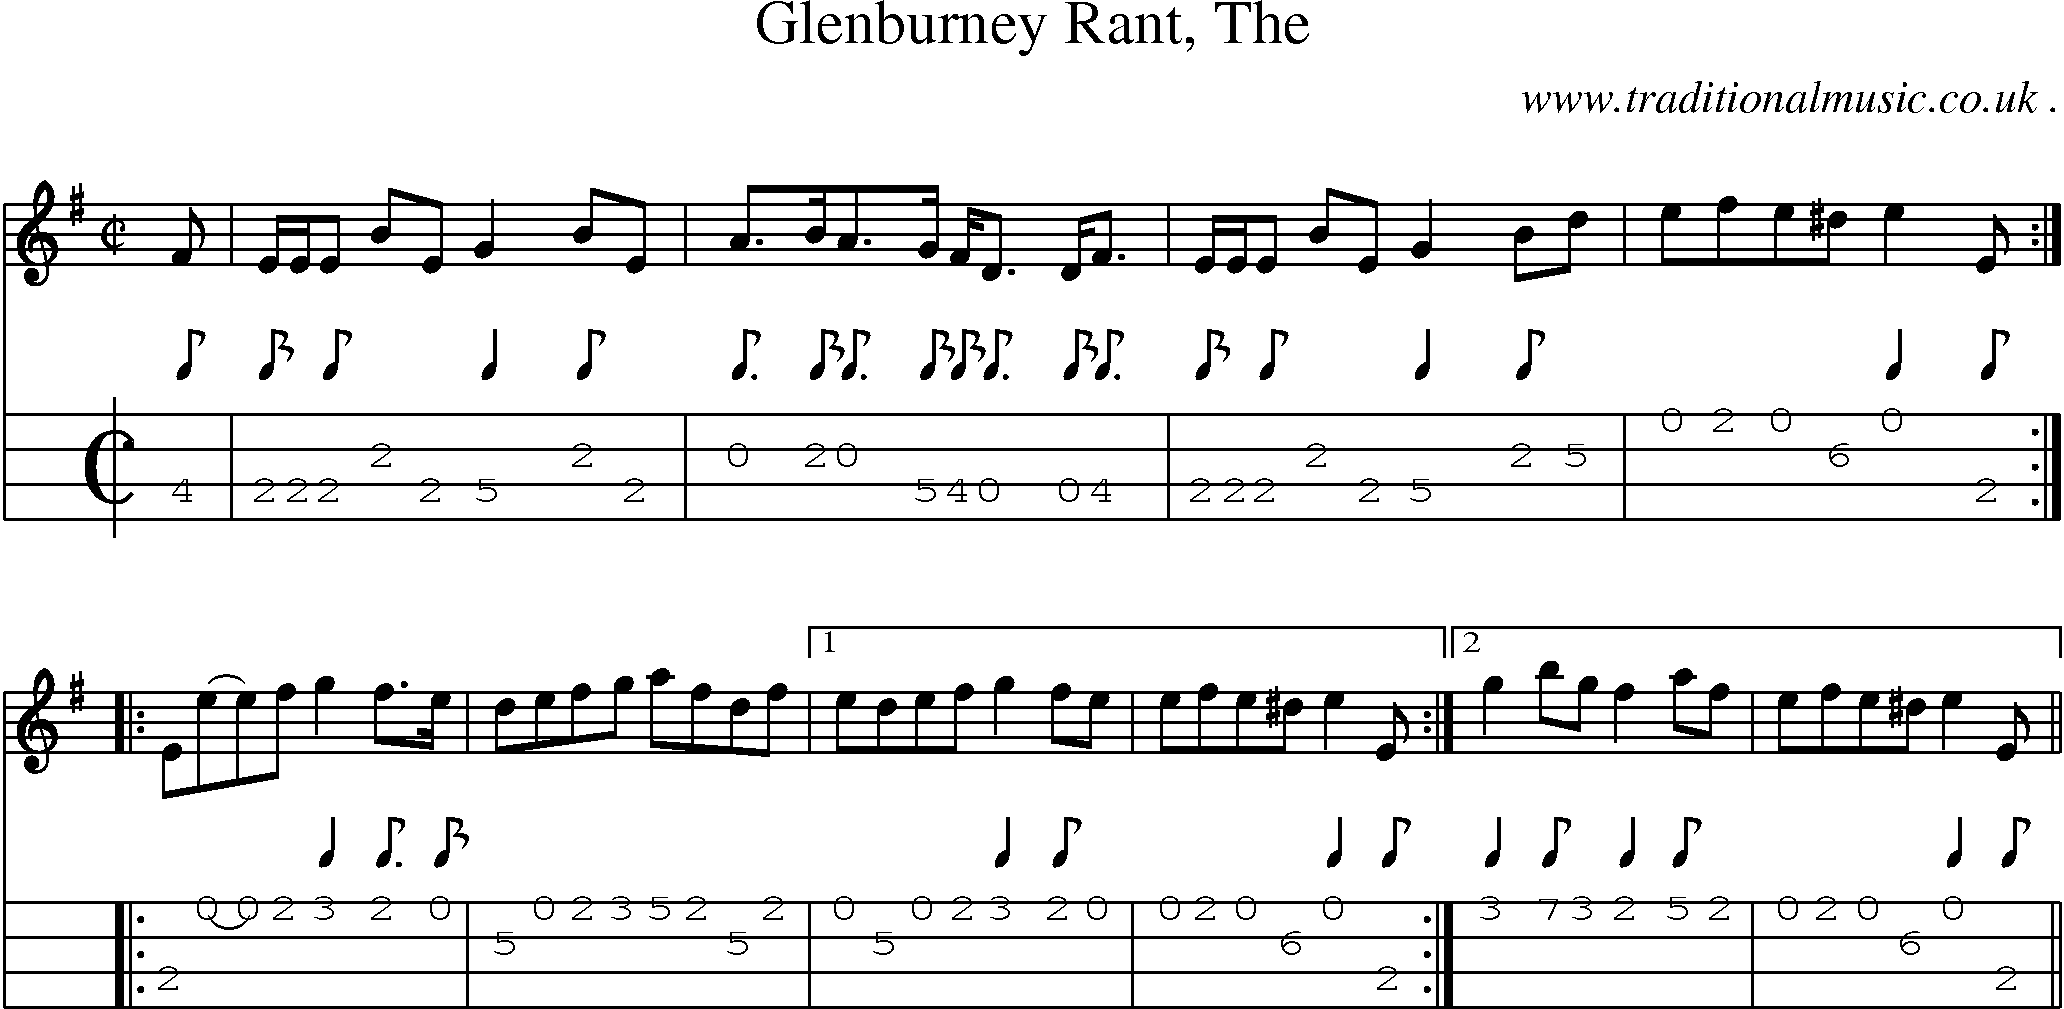 Sheet-music  score, Chords and Mandolin Tabs for Glenburney Rant The